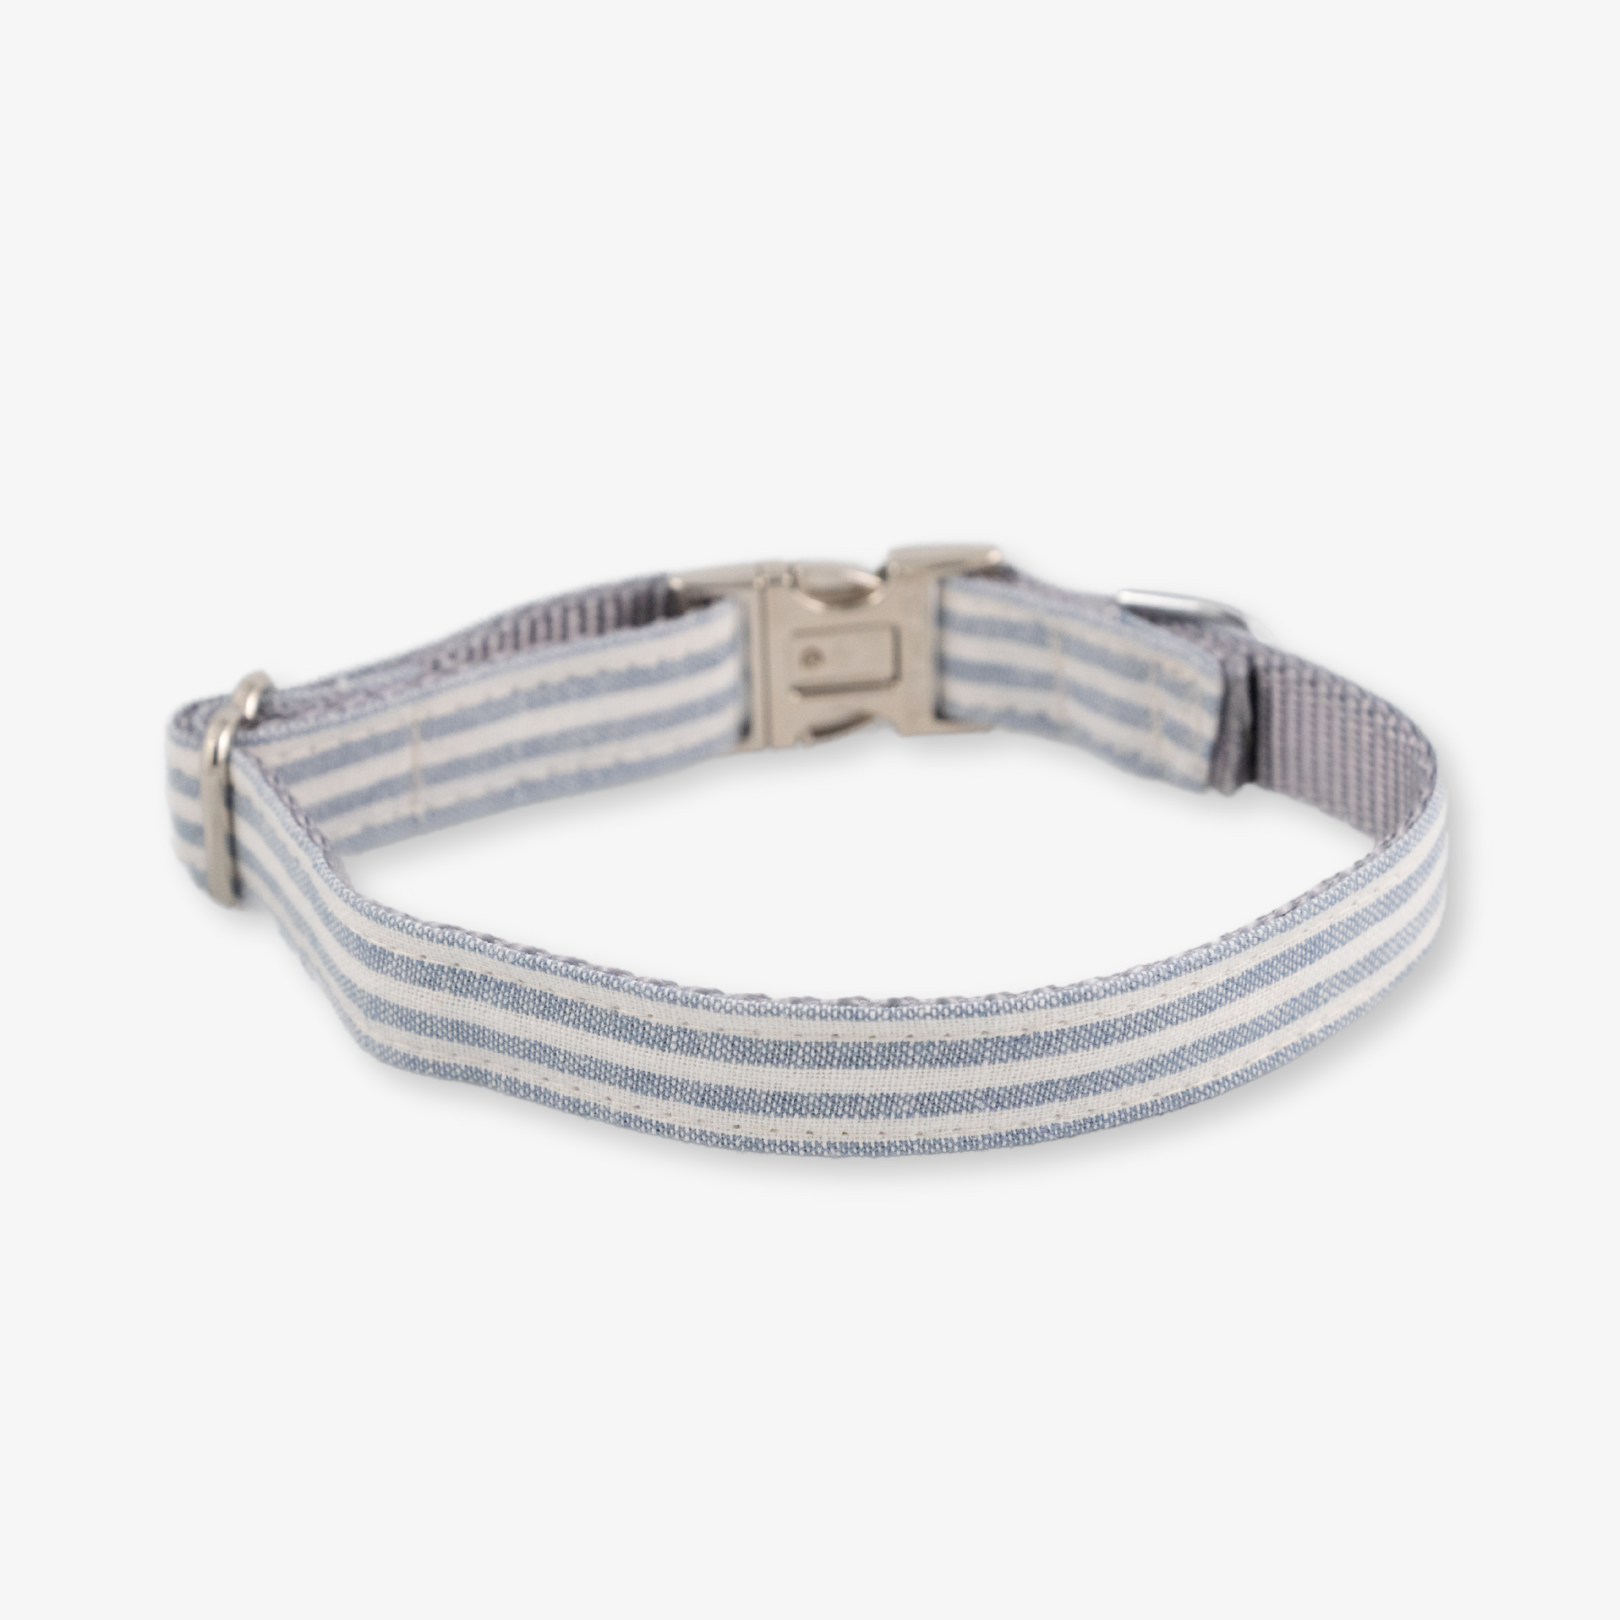 Chambray stripe dog collar